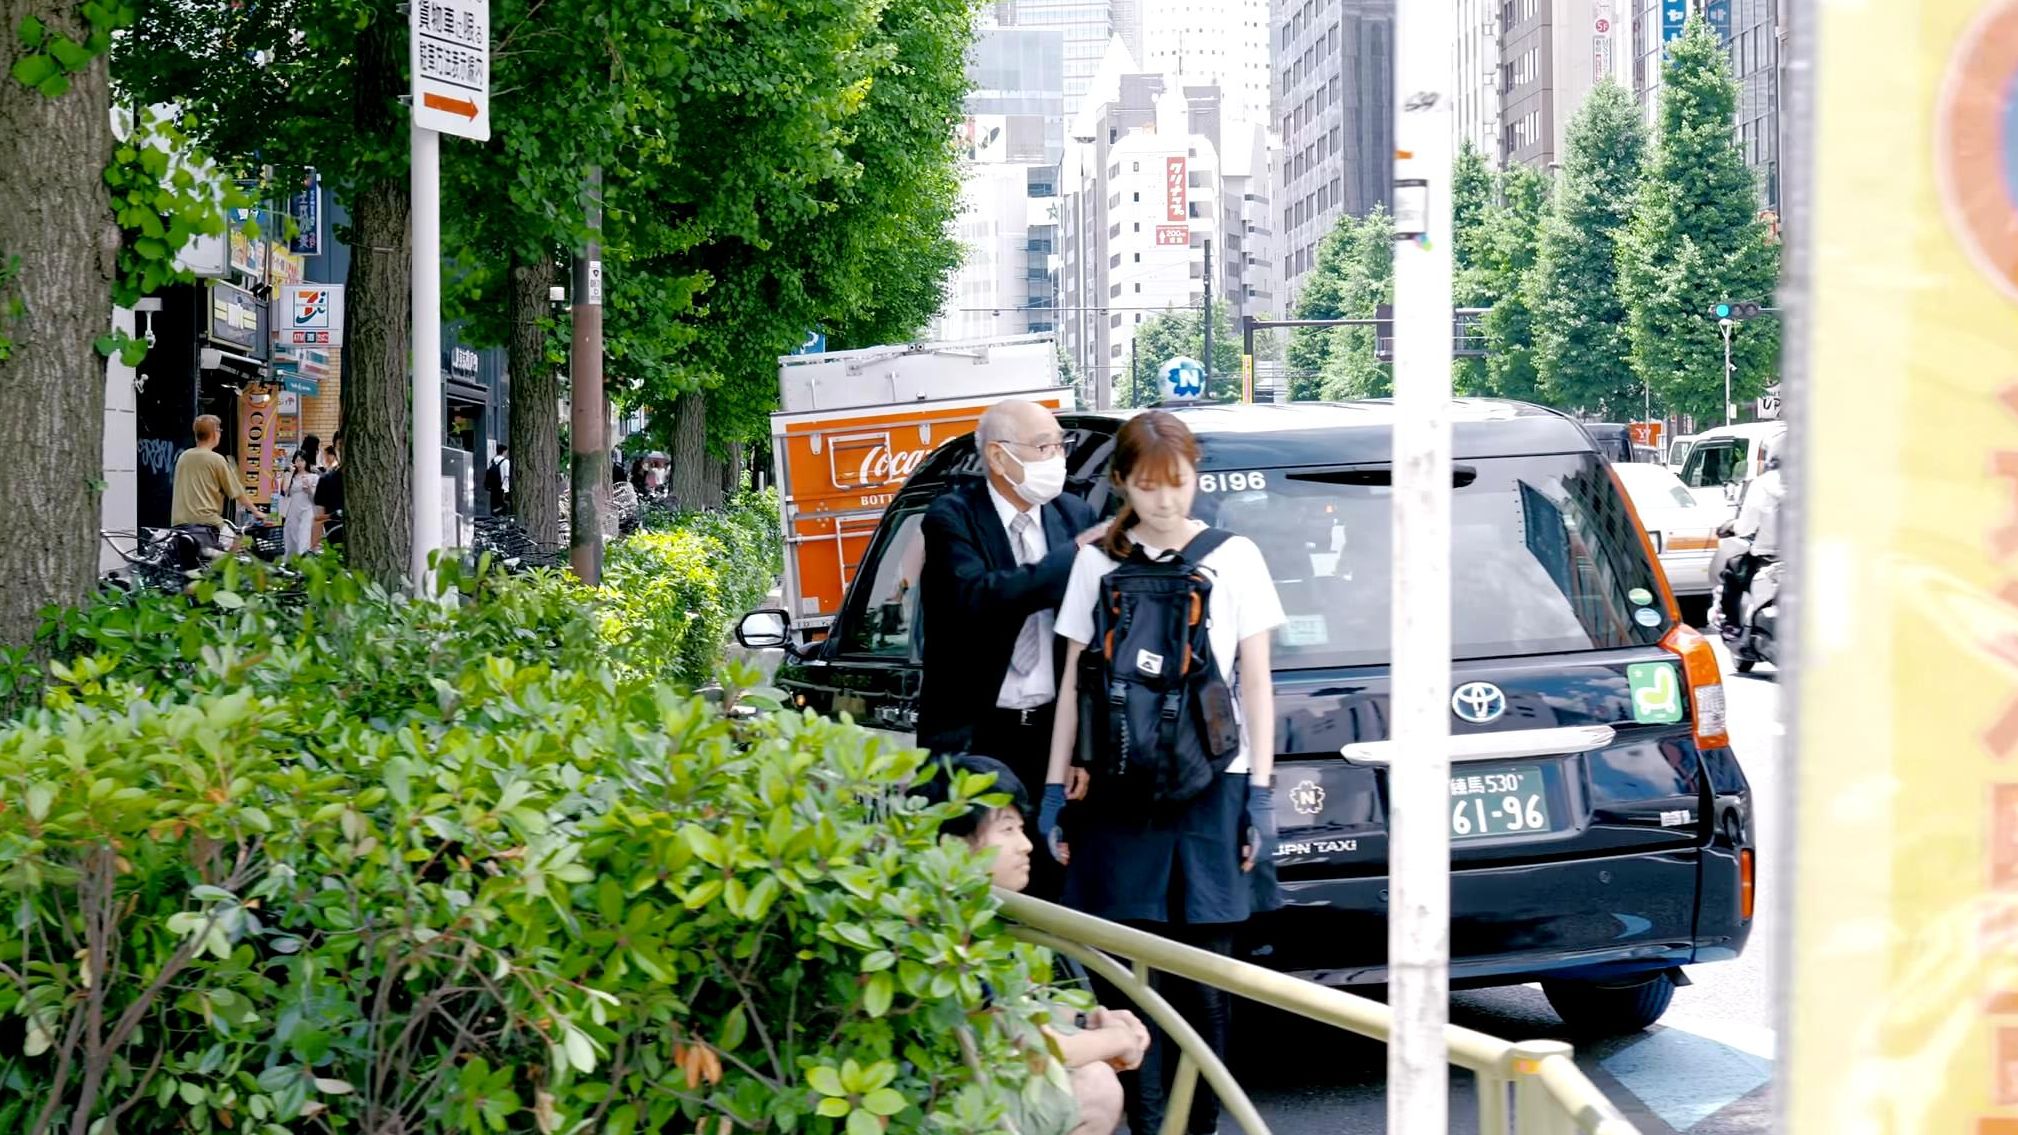 【4k60帧】超清日本:东京涩谷区代代木周边漫步